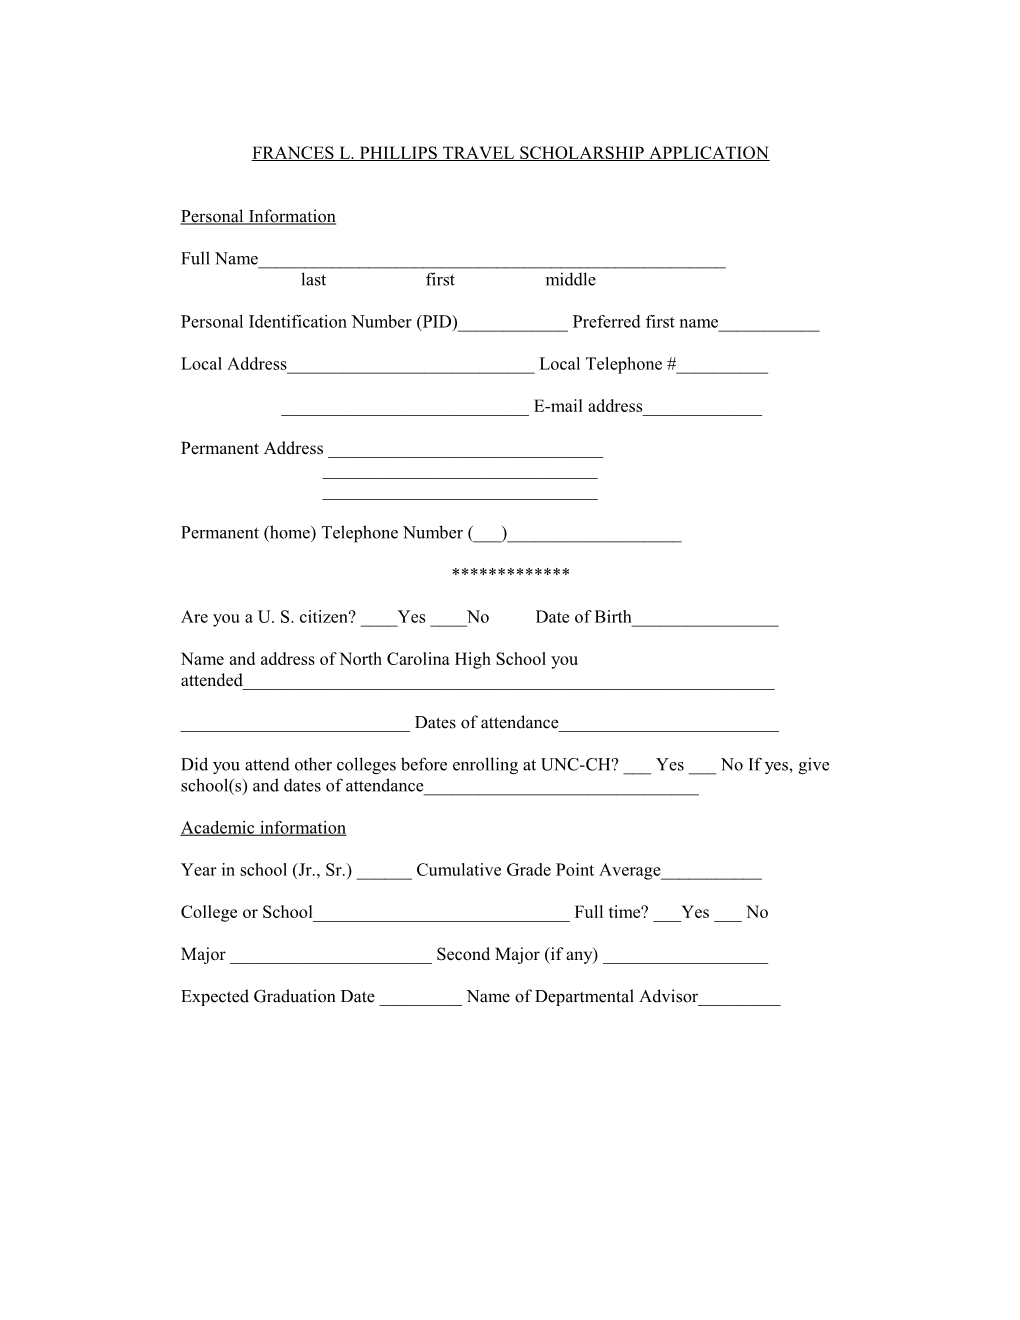 Frances L. Phillips Travel Scholarship Application